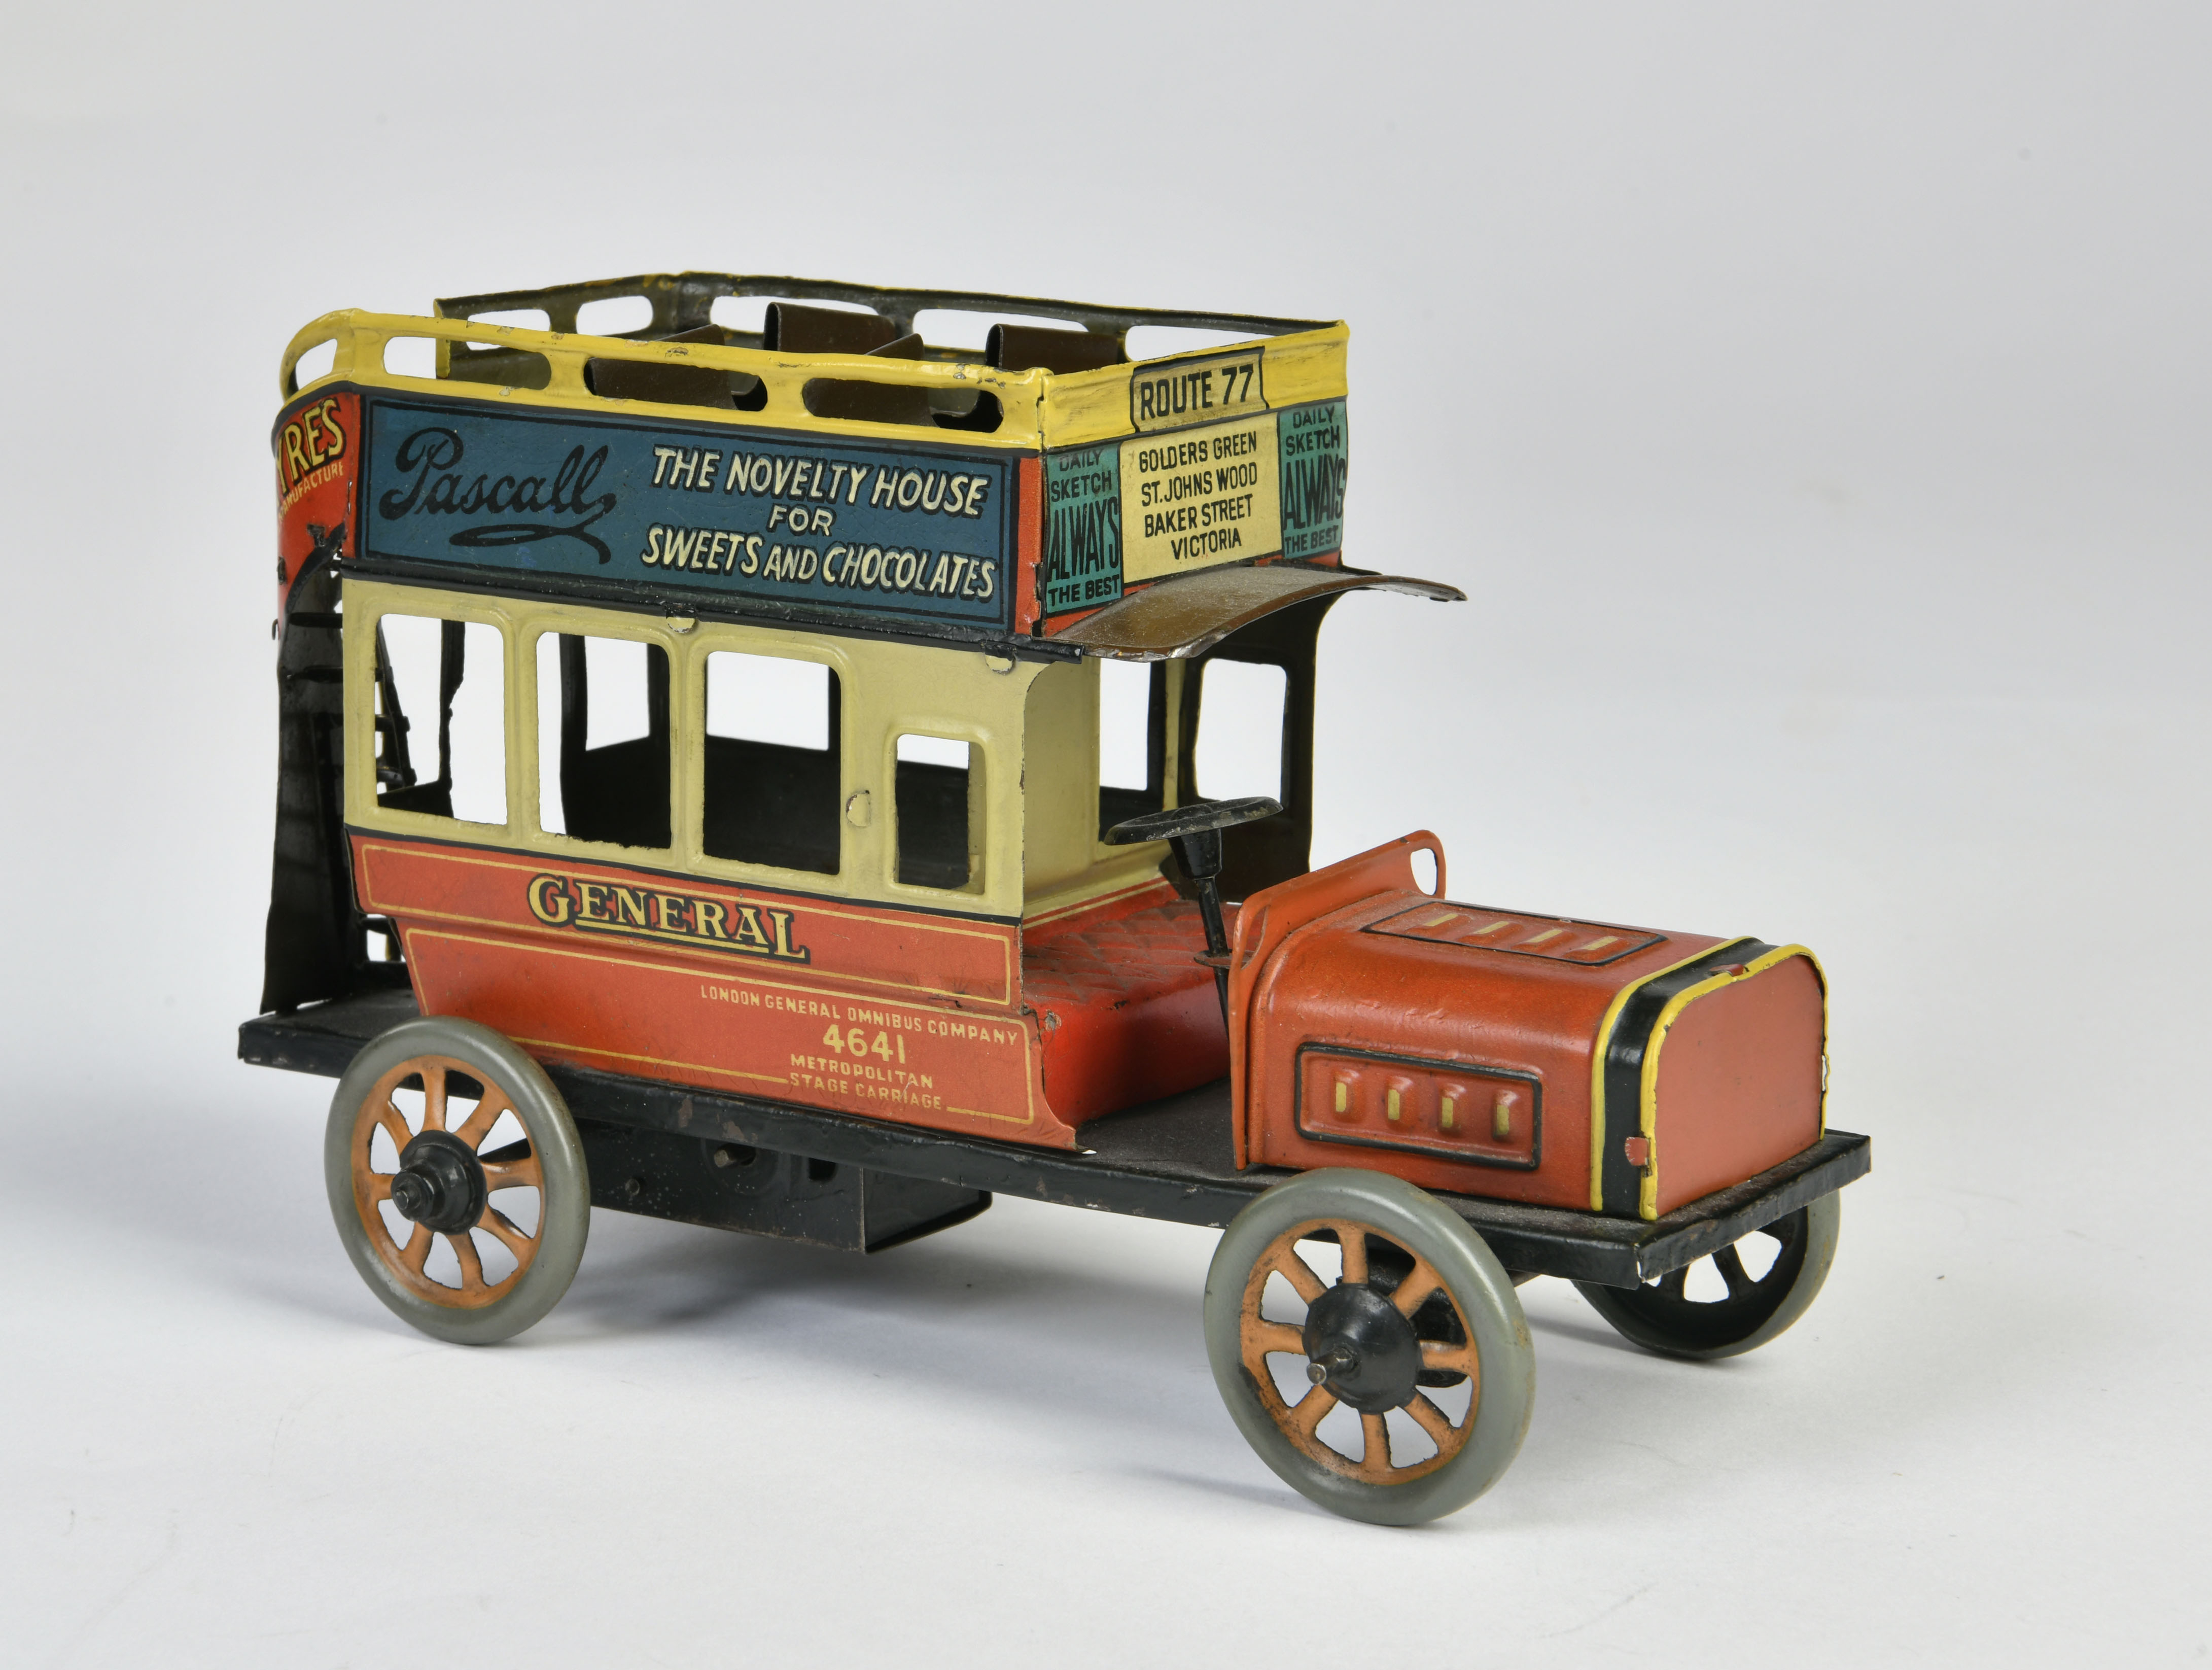 Bing, bus with advertising, Germany pw, 19 cm, tin, cw ok, nice original condition